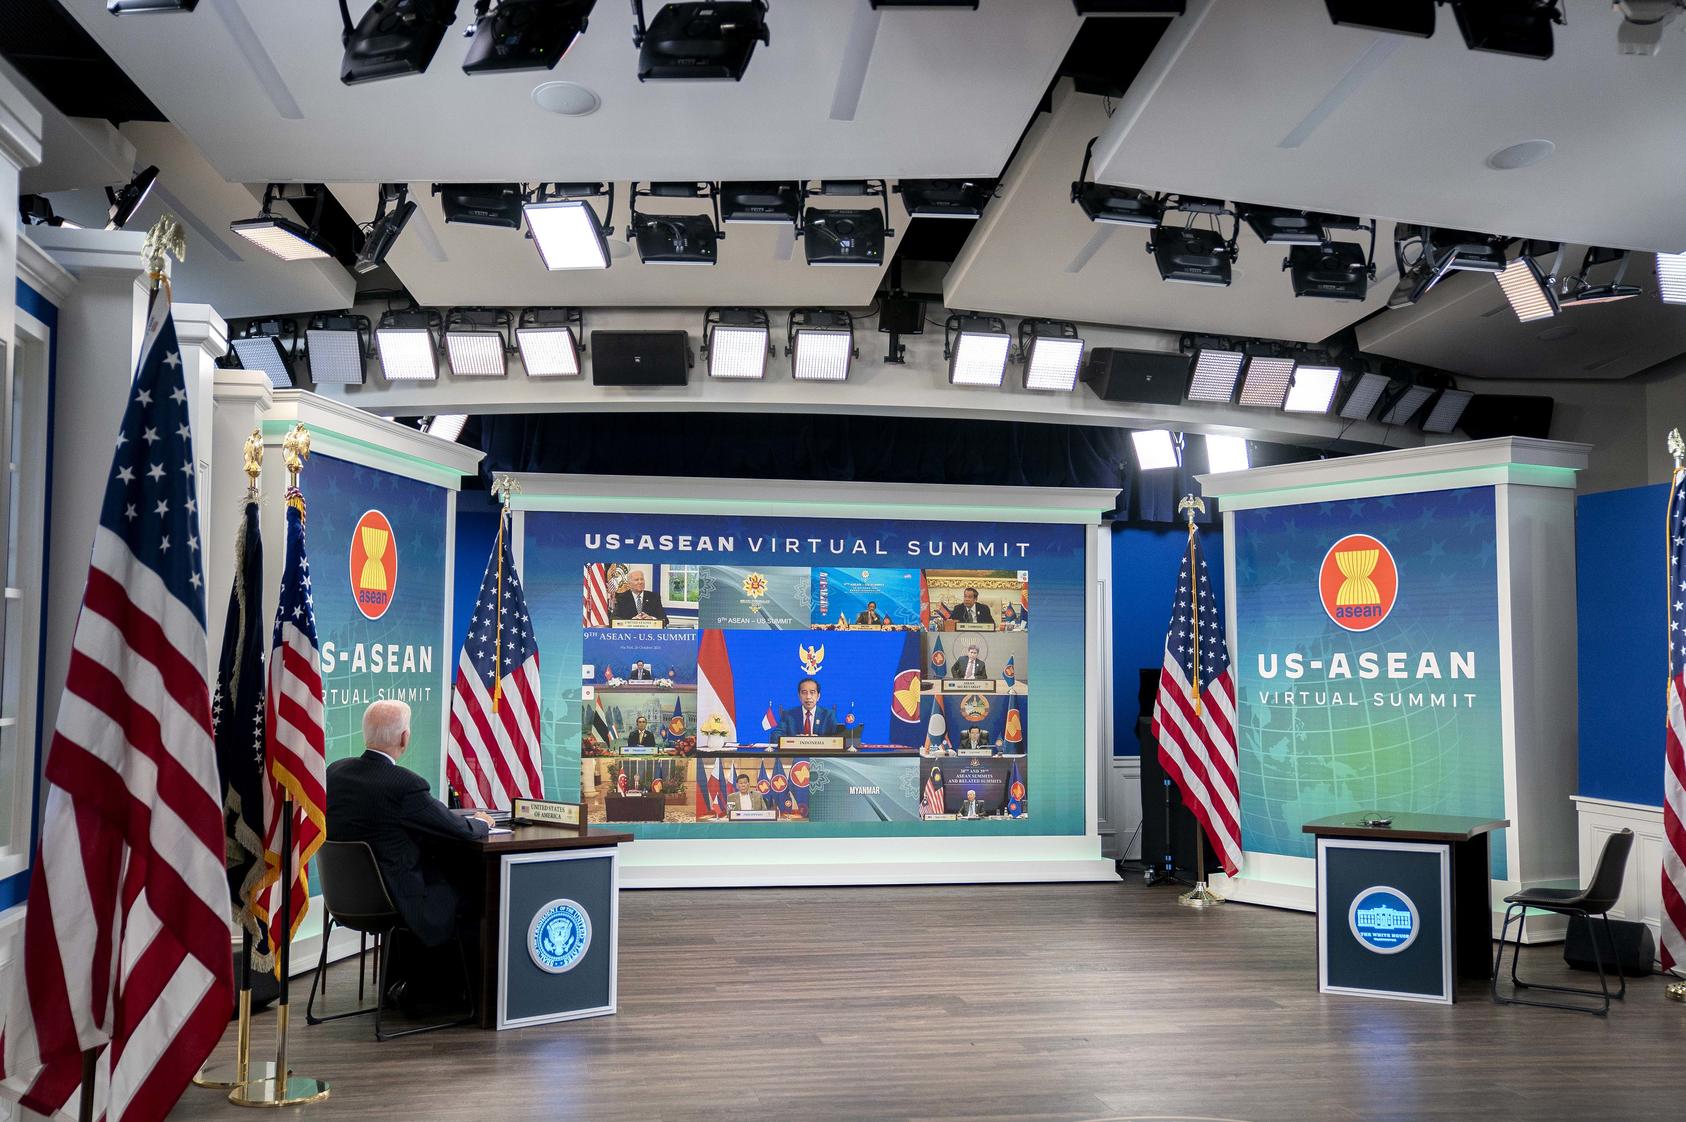 President Biden attends a virtual U.S.-ASEAN Summit meeting, Tuesday, Oct. 26, 2021. (Stefani Reynolds/The New York Times)